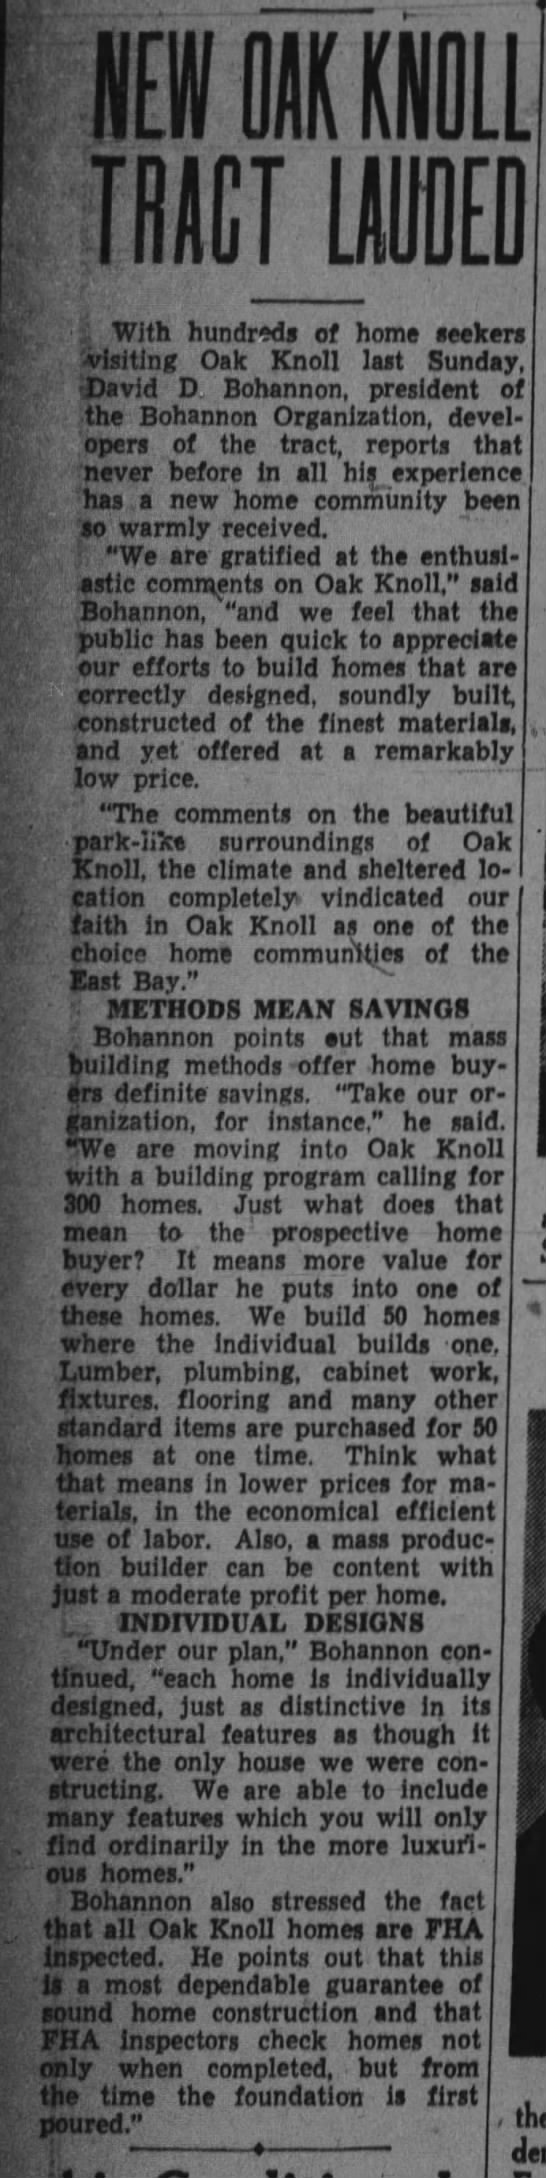 New Oak Knoll Tract Lauded - Oakland Tribune June 13, 1937 - 